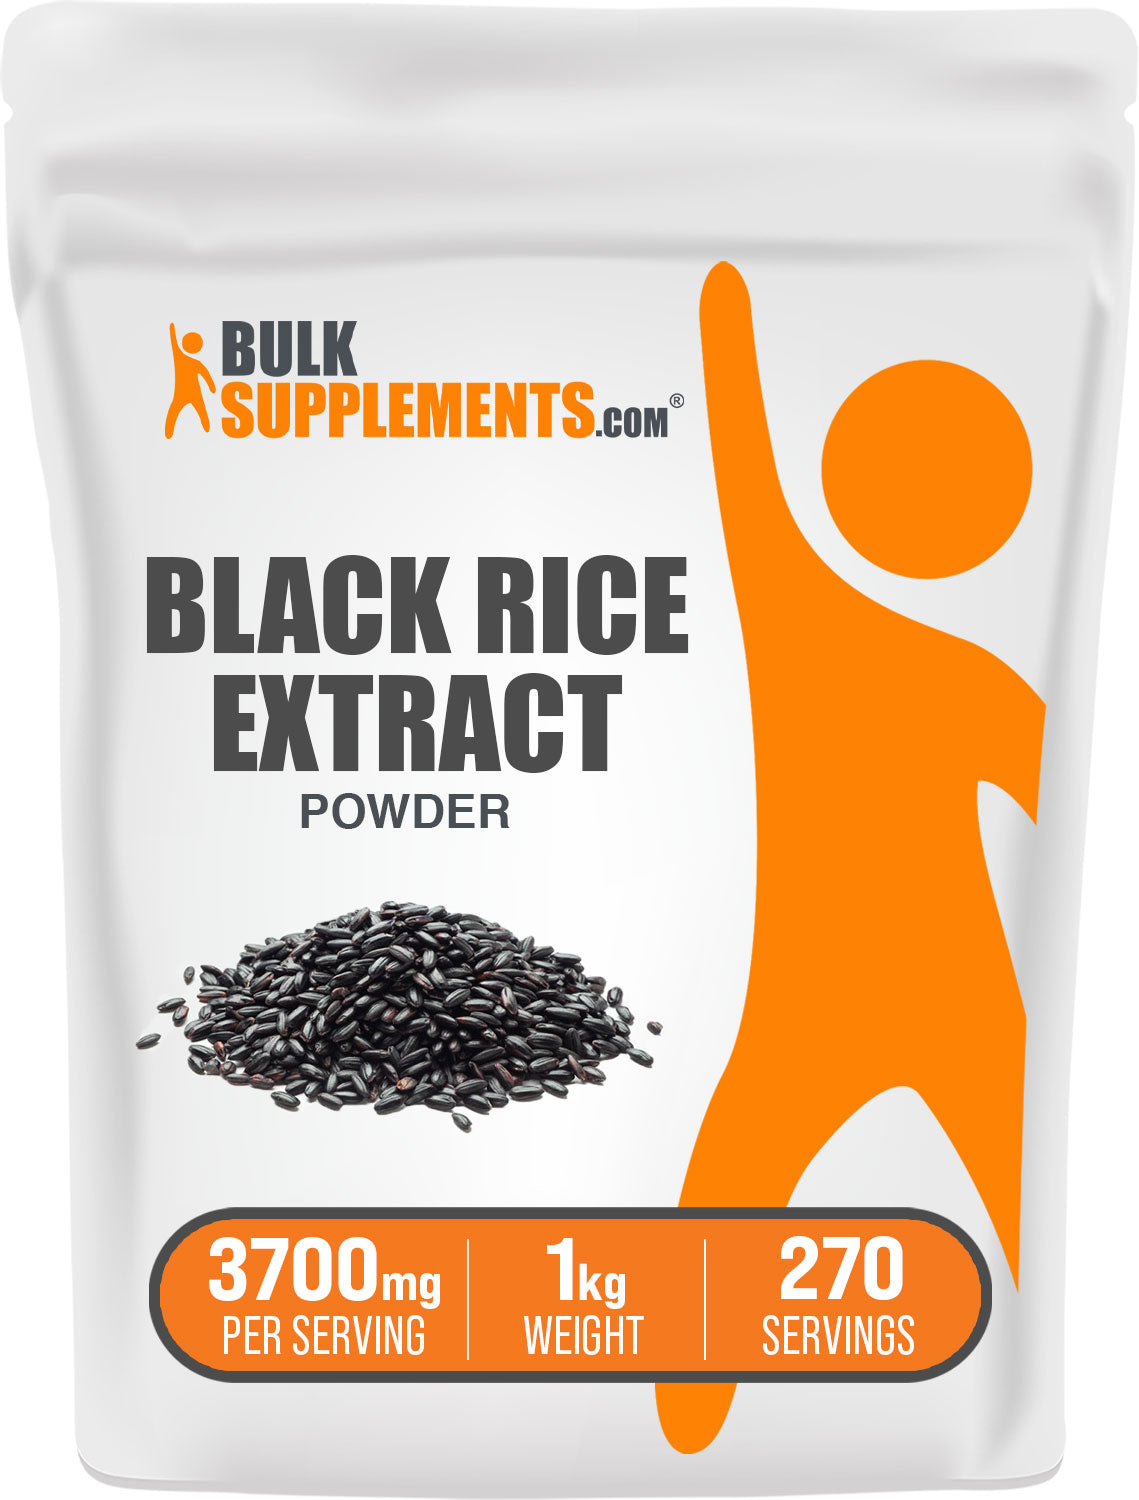 1kg bag black rice powder